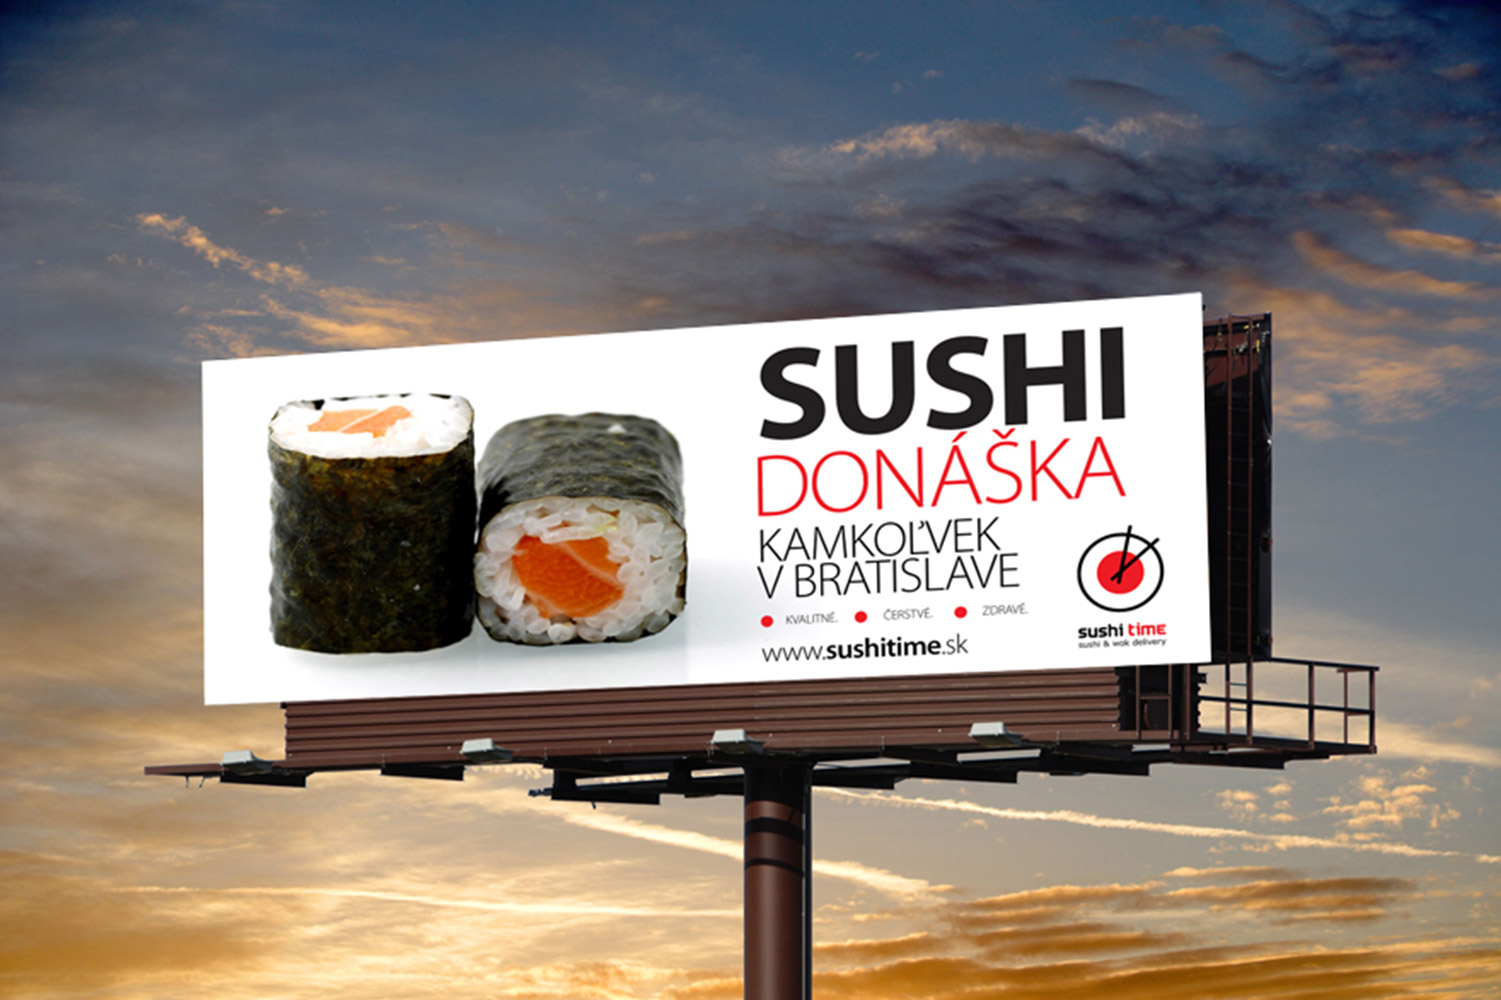 Sushi Time, print image